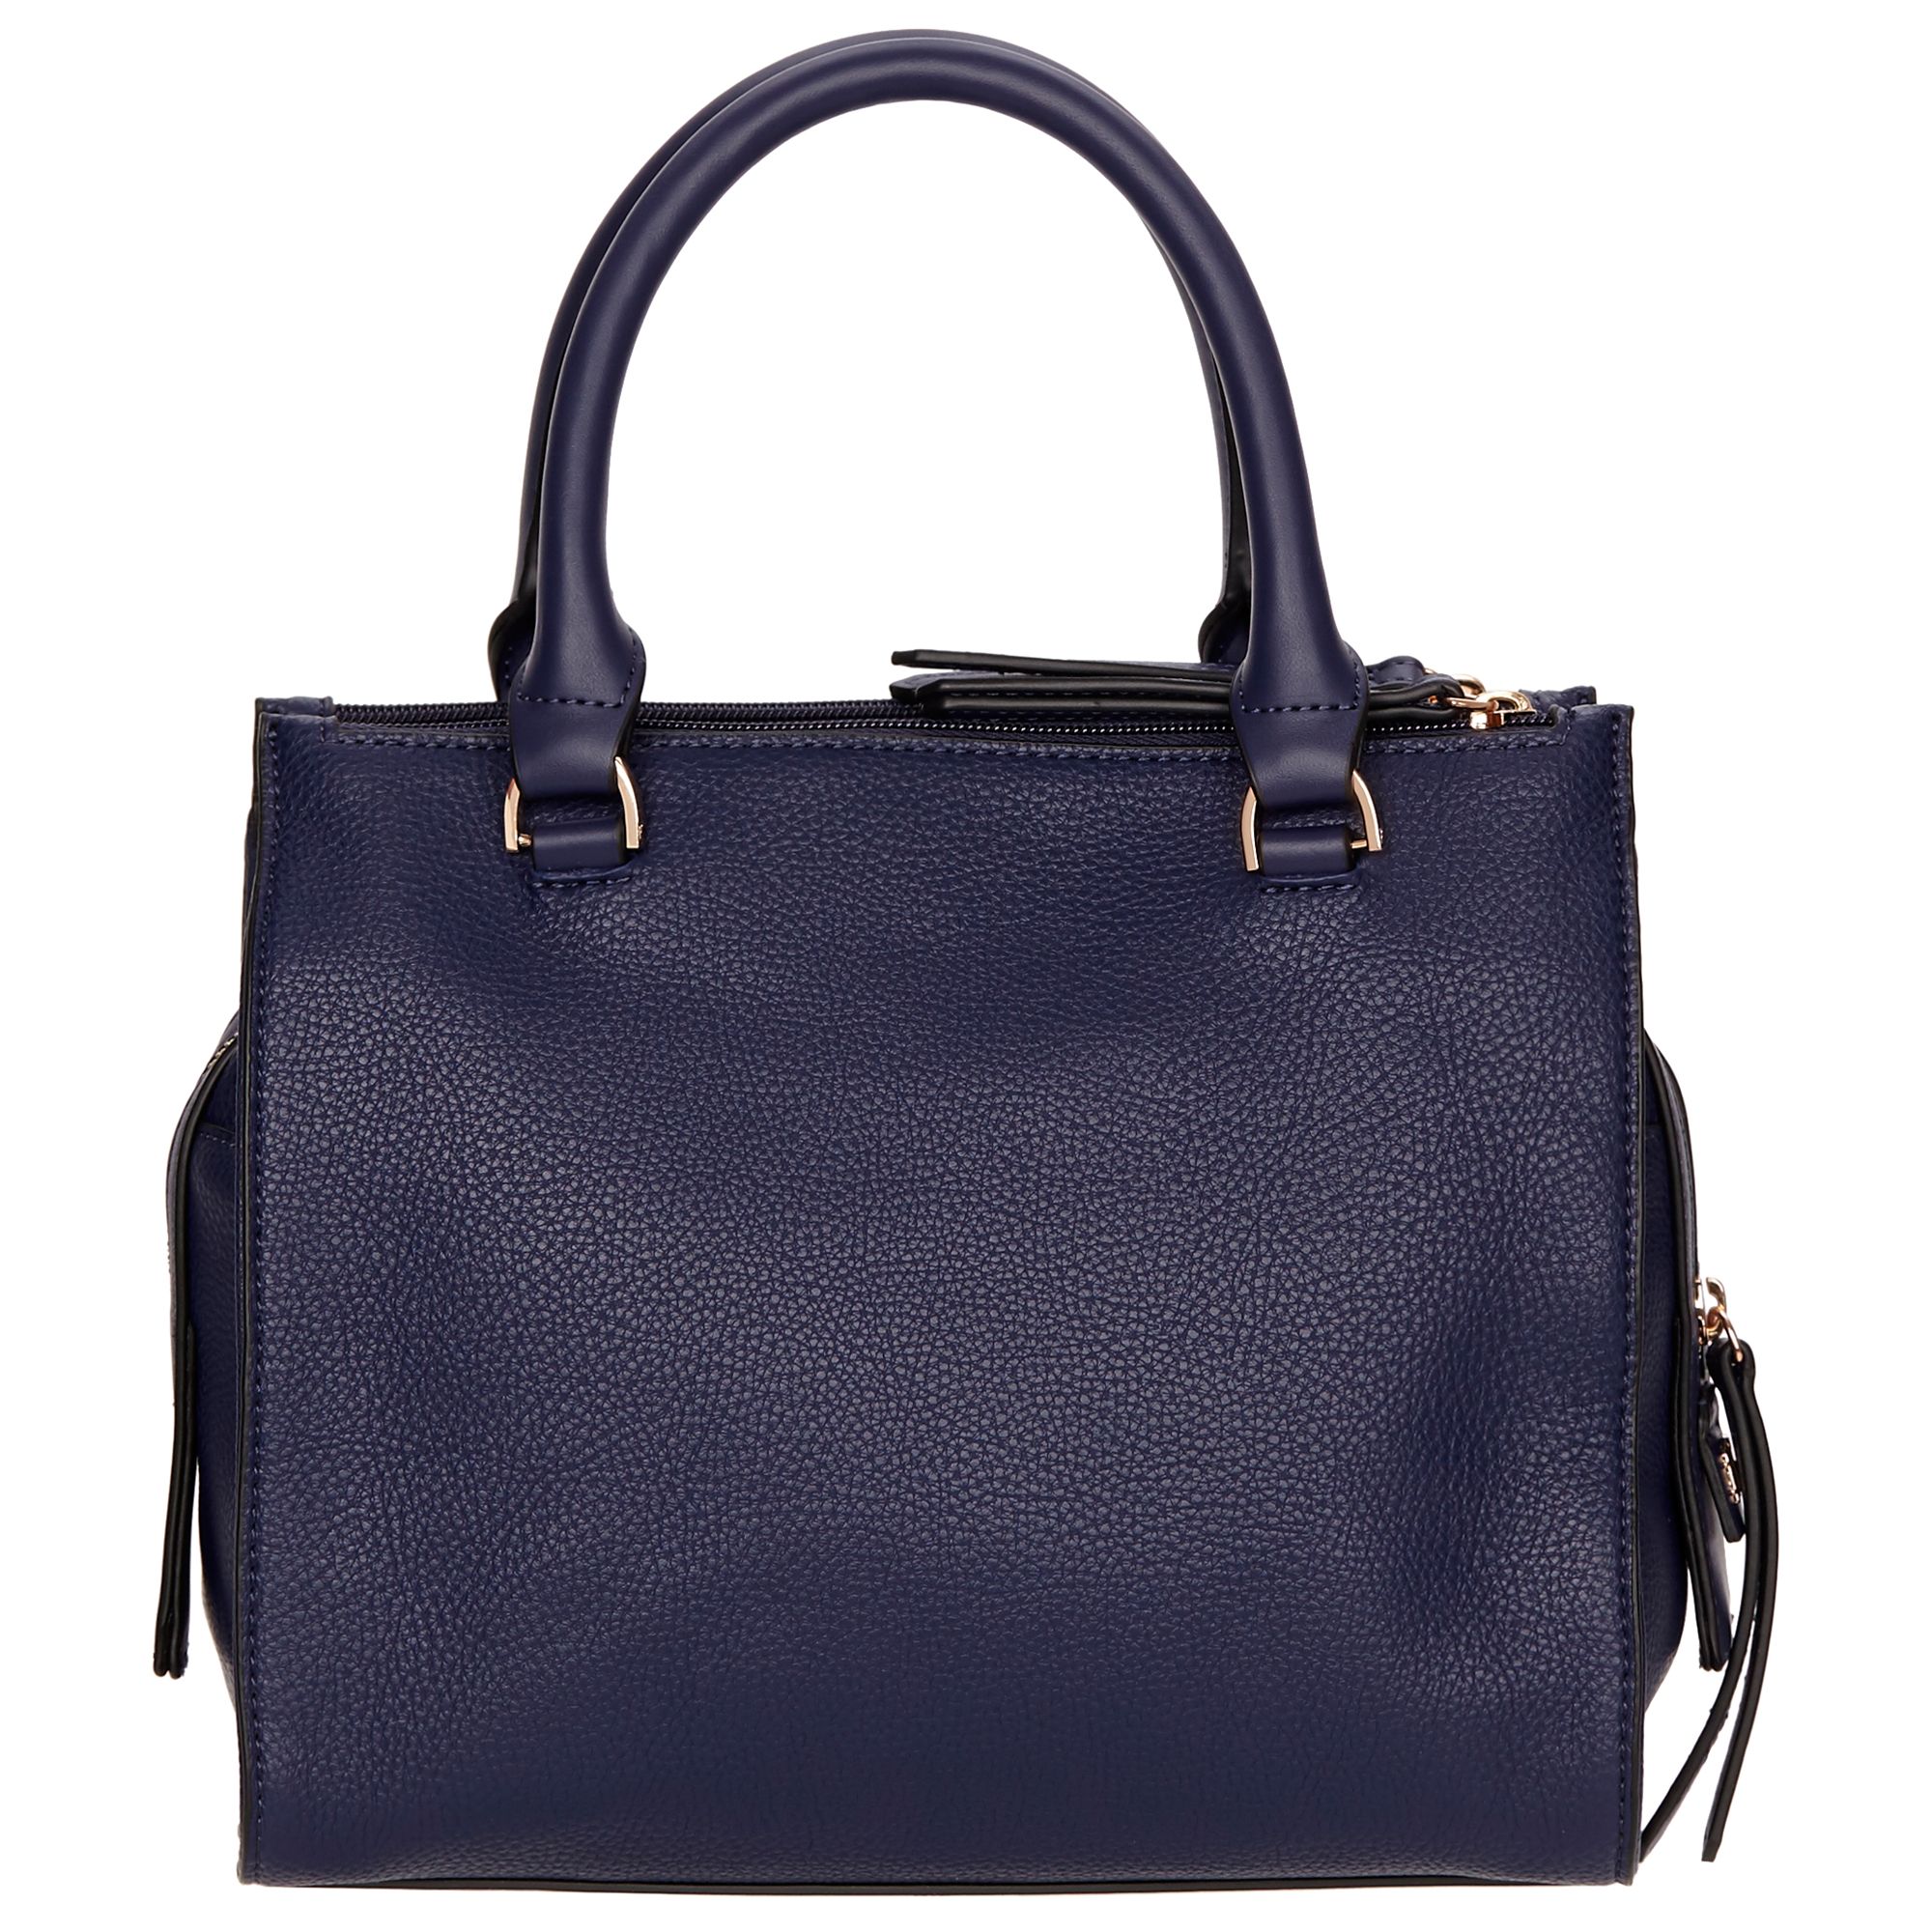 Fiorelli Mia Small Grab Bag at John Lewis & Partners